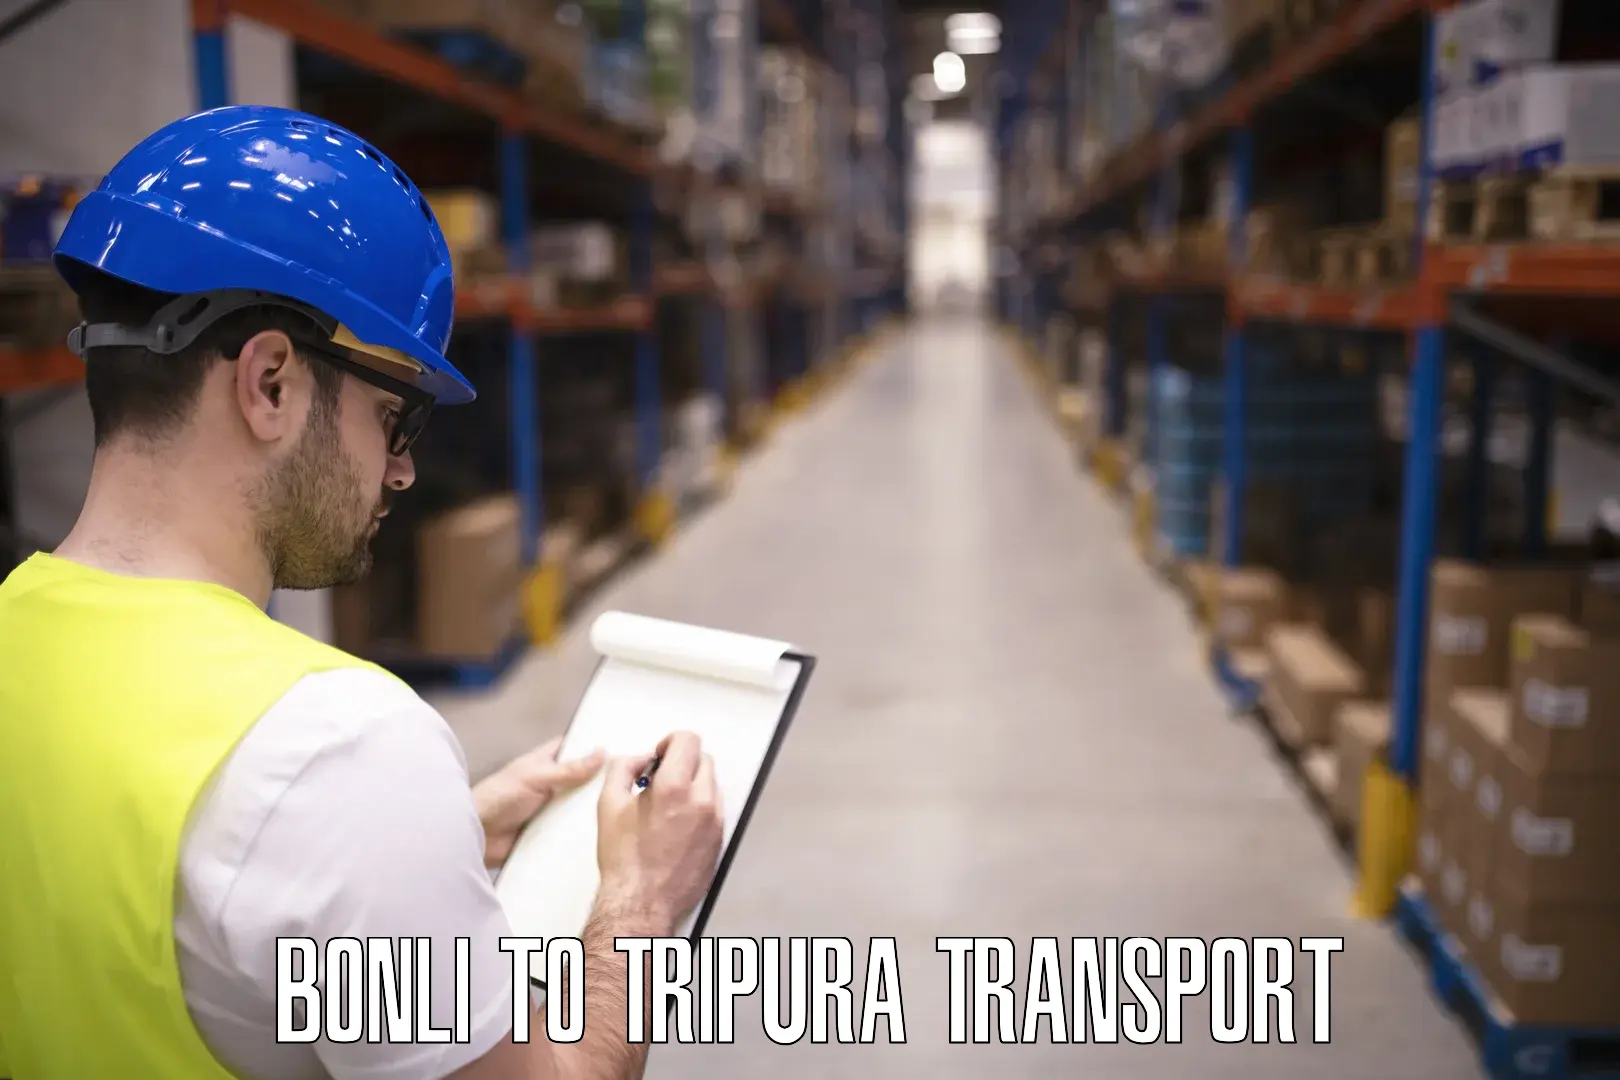 Furniture transport service Bonli to Tripura